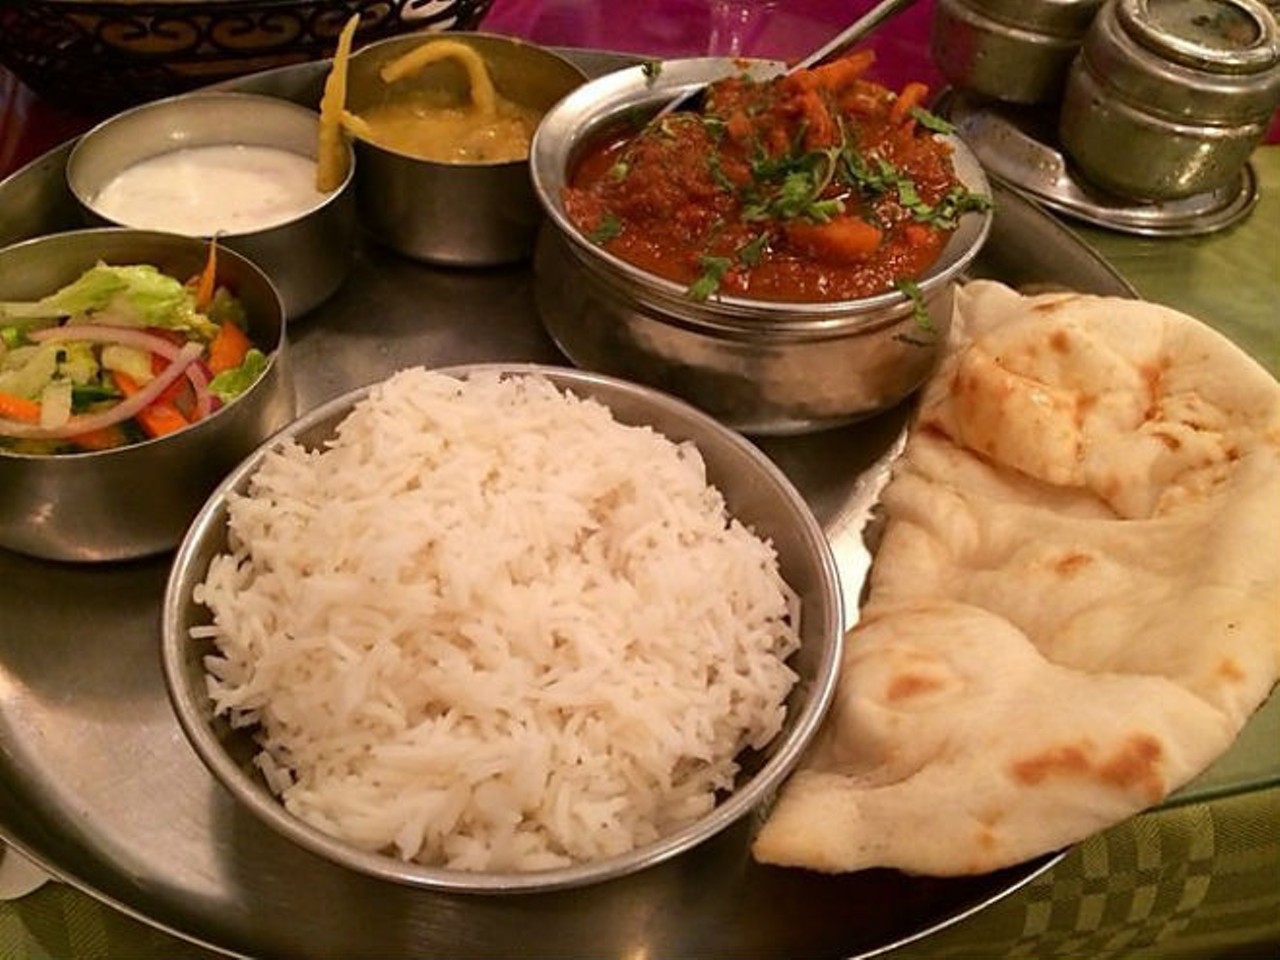 Best Indian: Tamarind Indian Cuisine
Photo via Tamarind